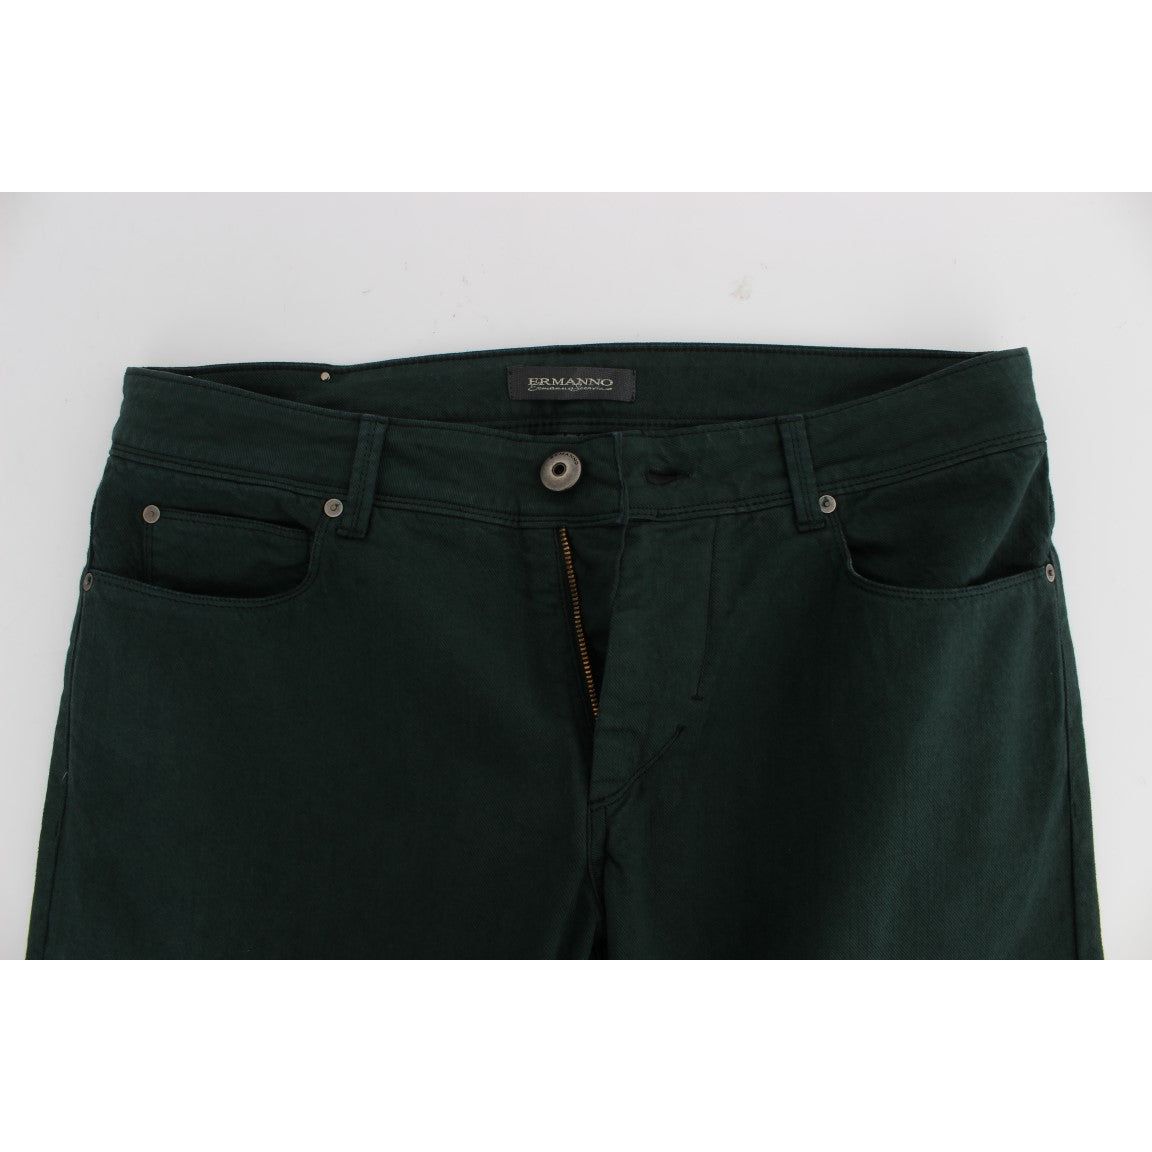 Ermanno Scervino Chic Green Straight Cut Jeans green-cotton-denim-stretch-straight-fit-jeans 299691-green-cotton-denim-stretch-straight-fit-jeans-4.jpg